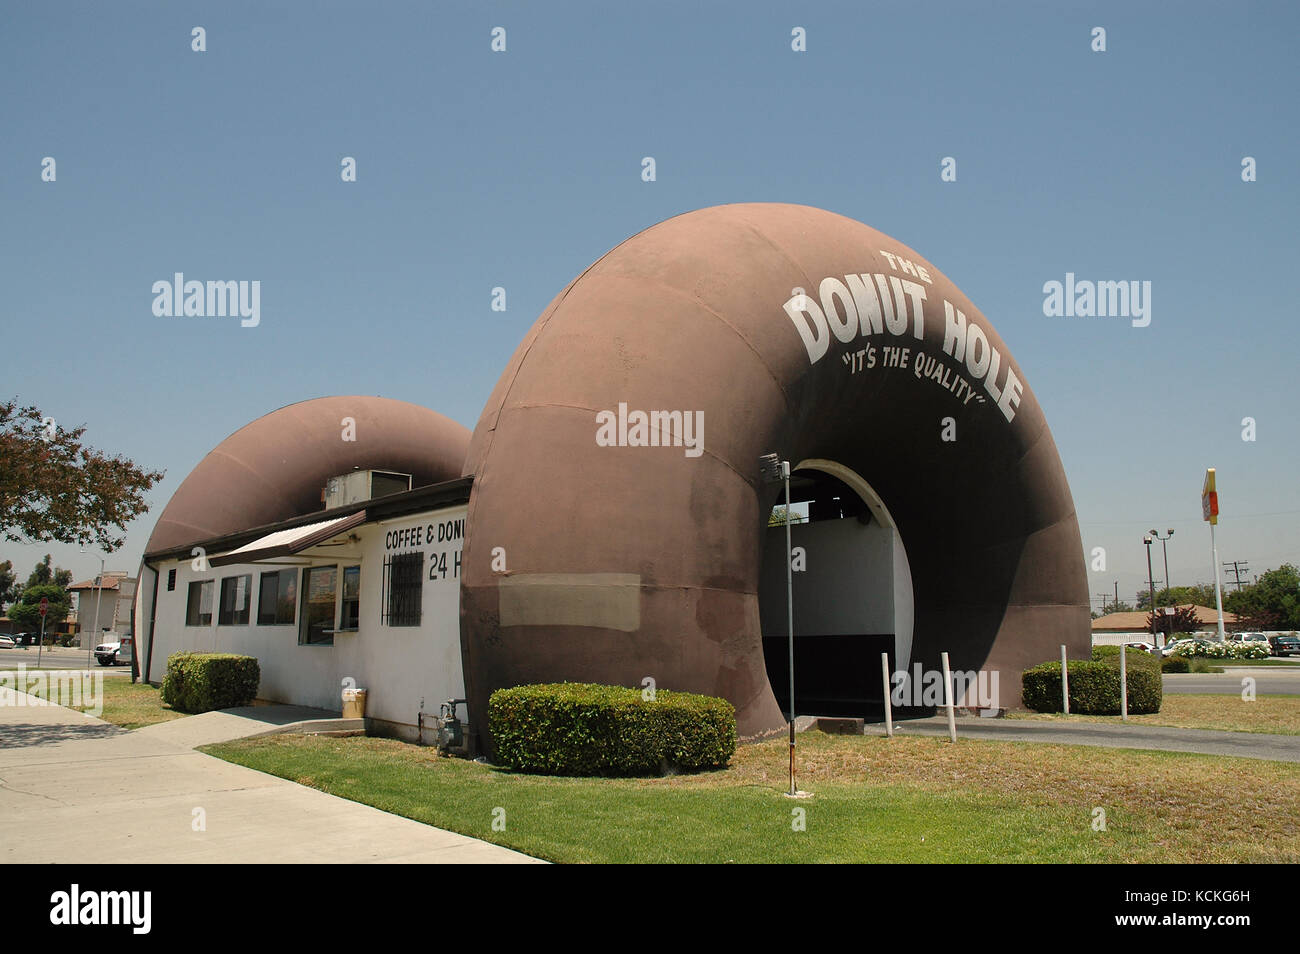 The Donut Hole drive-thru at La Puente, California, USA Stock Photo